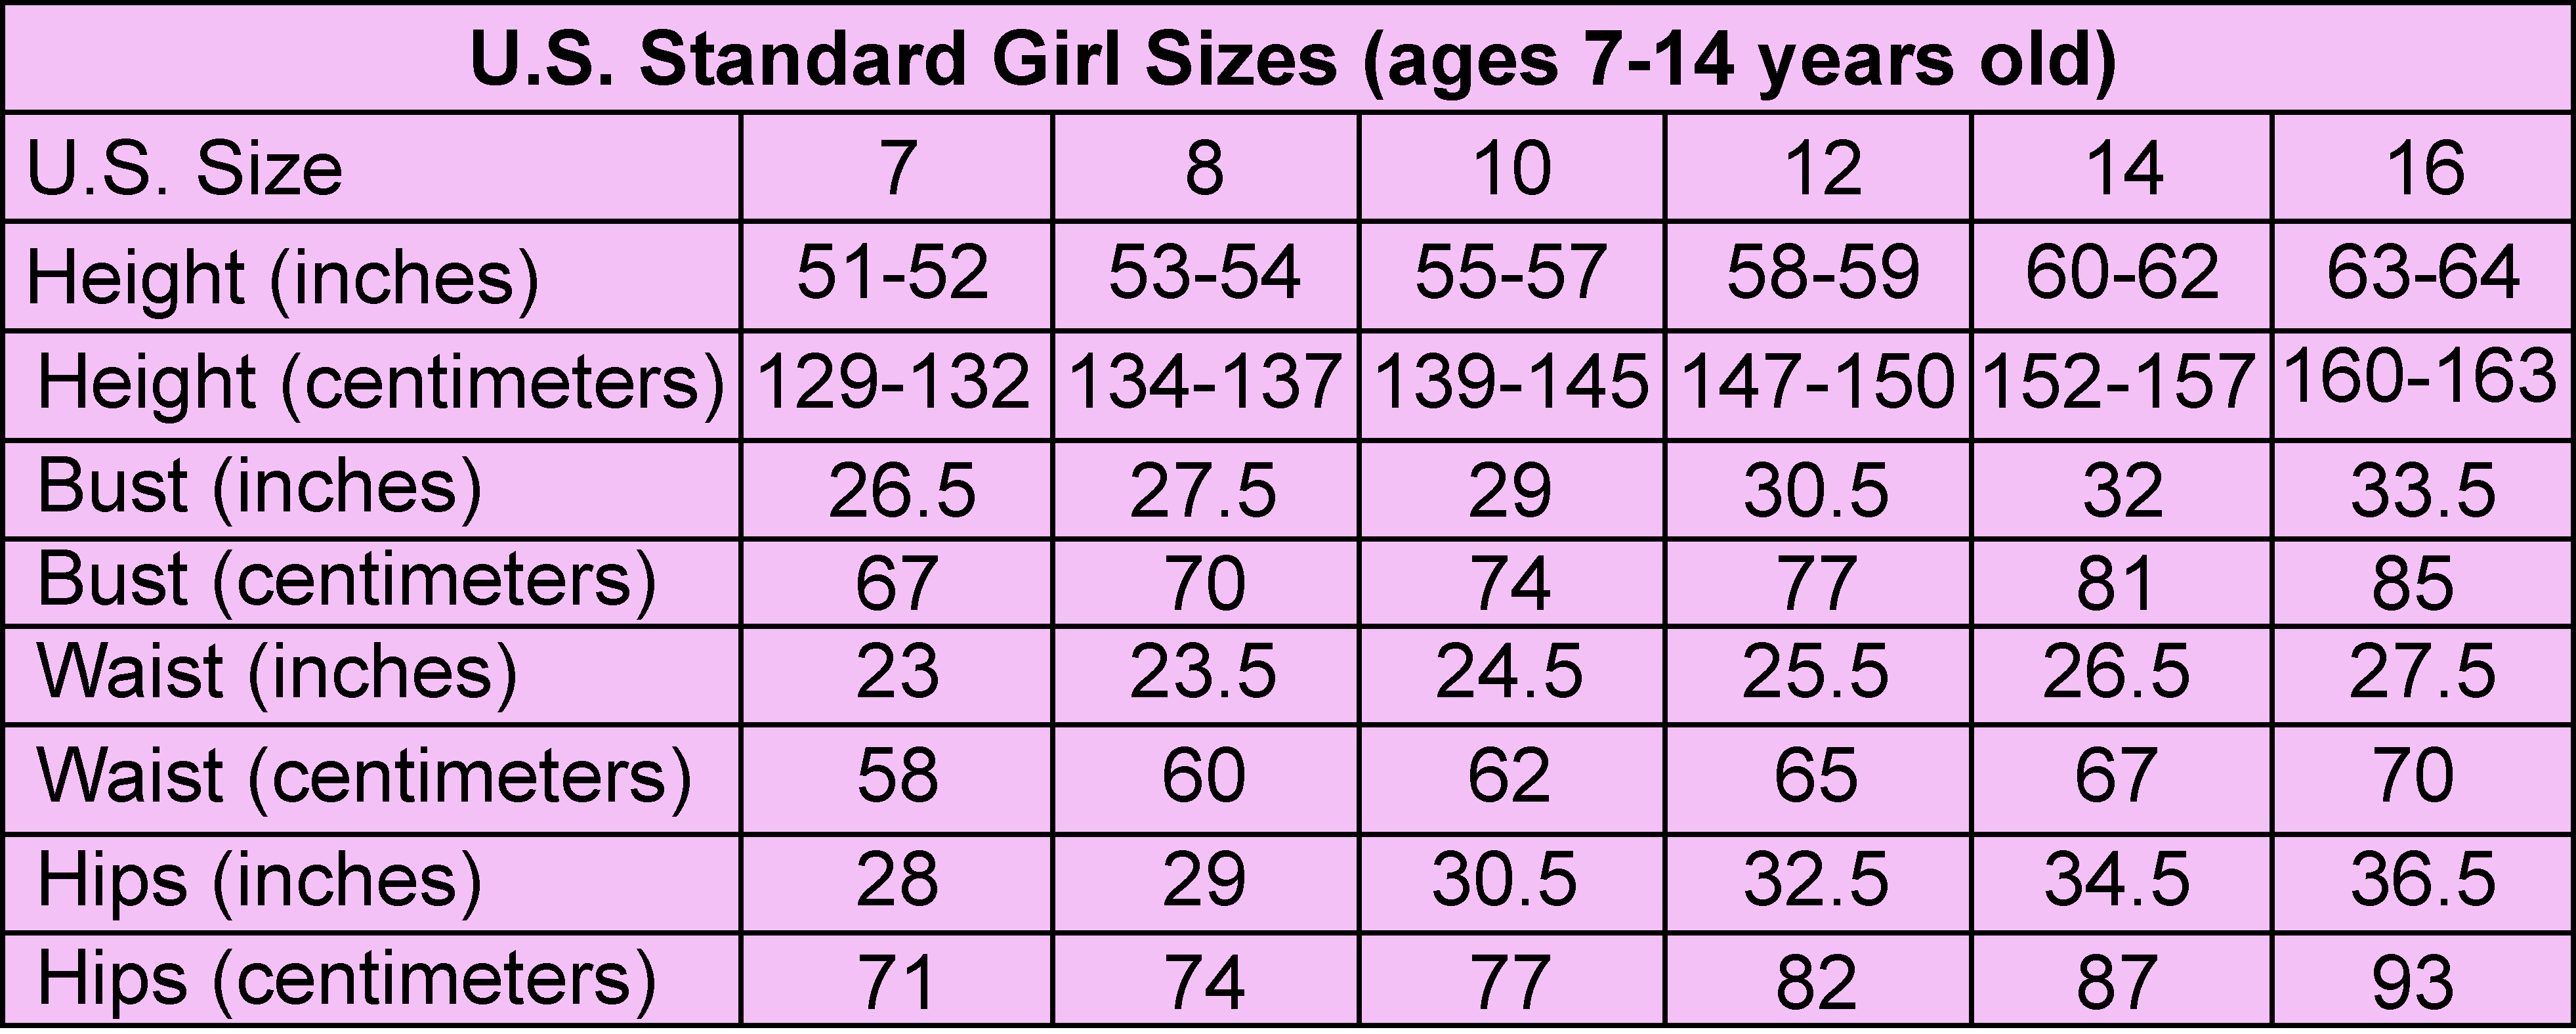 average shoe size for 4 year old boy us